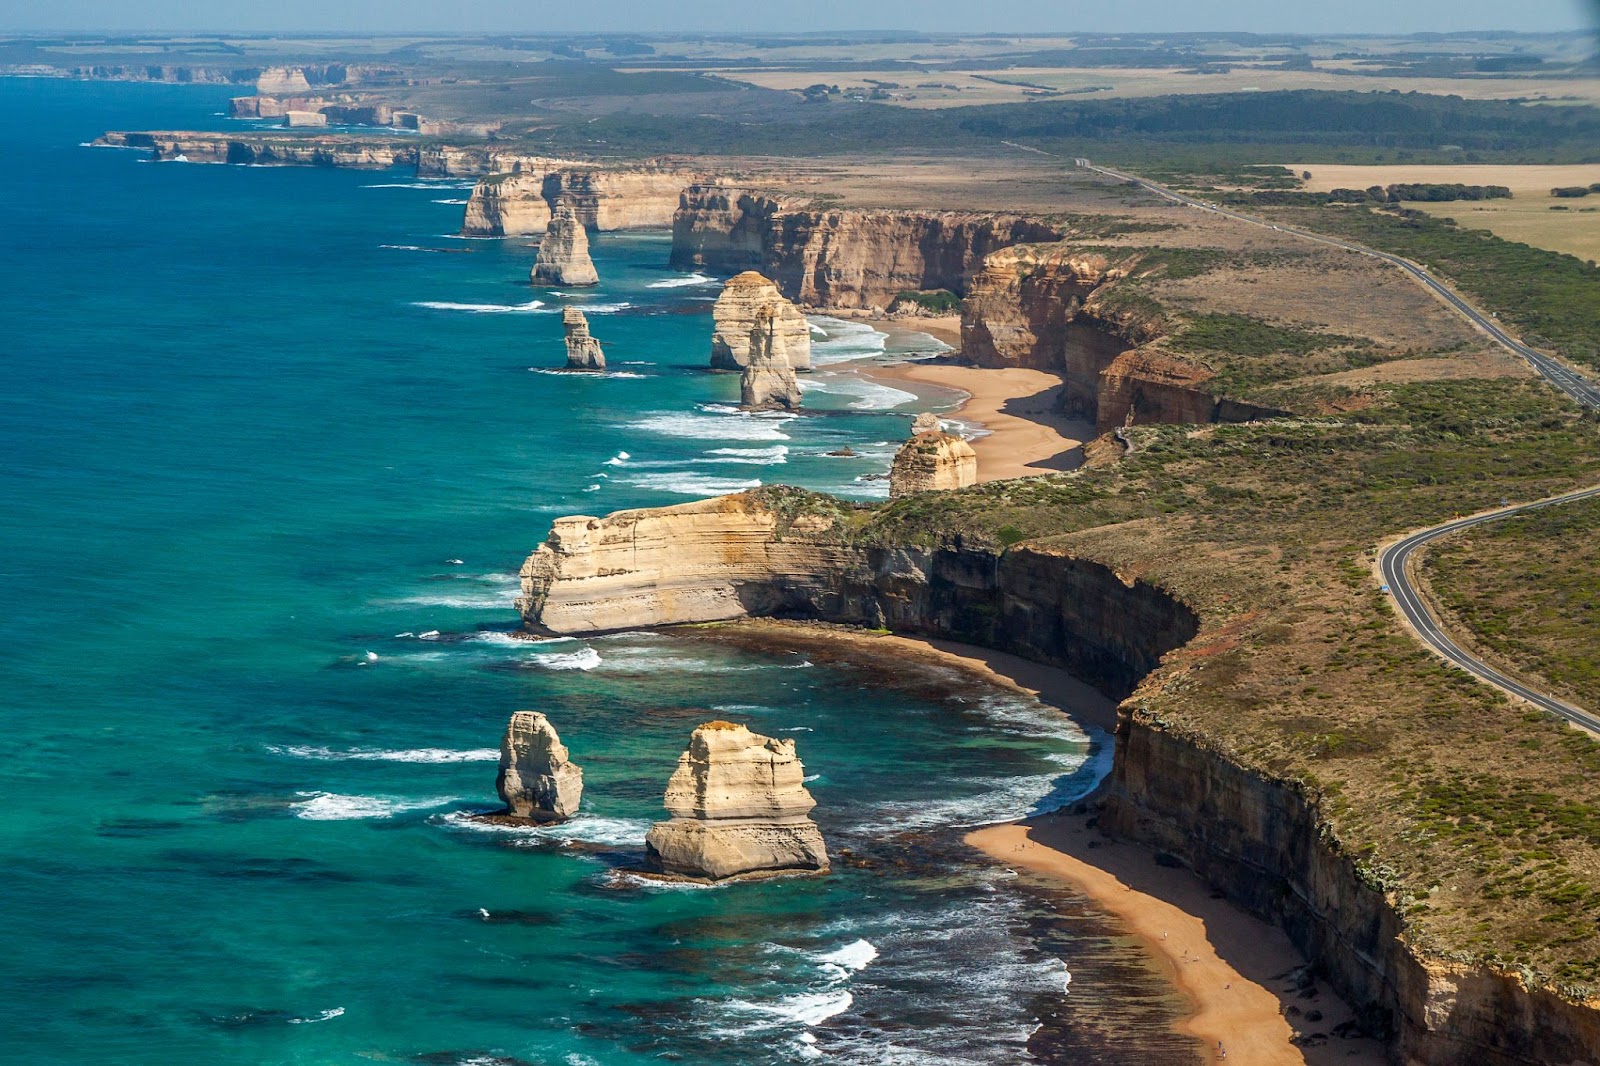 The Great Ocean Road, Australia - 23 Top Sights to See Before You Die